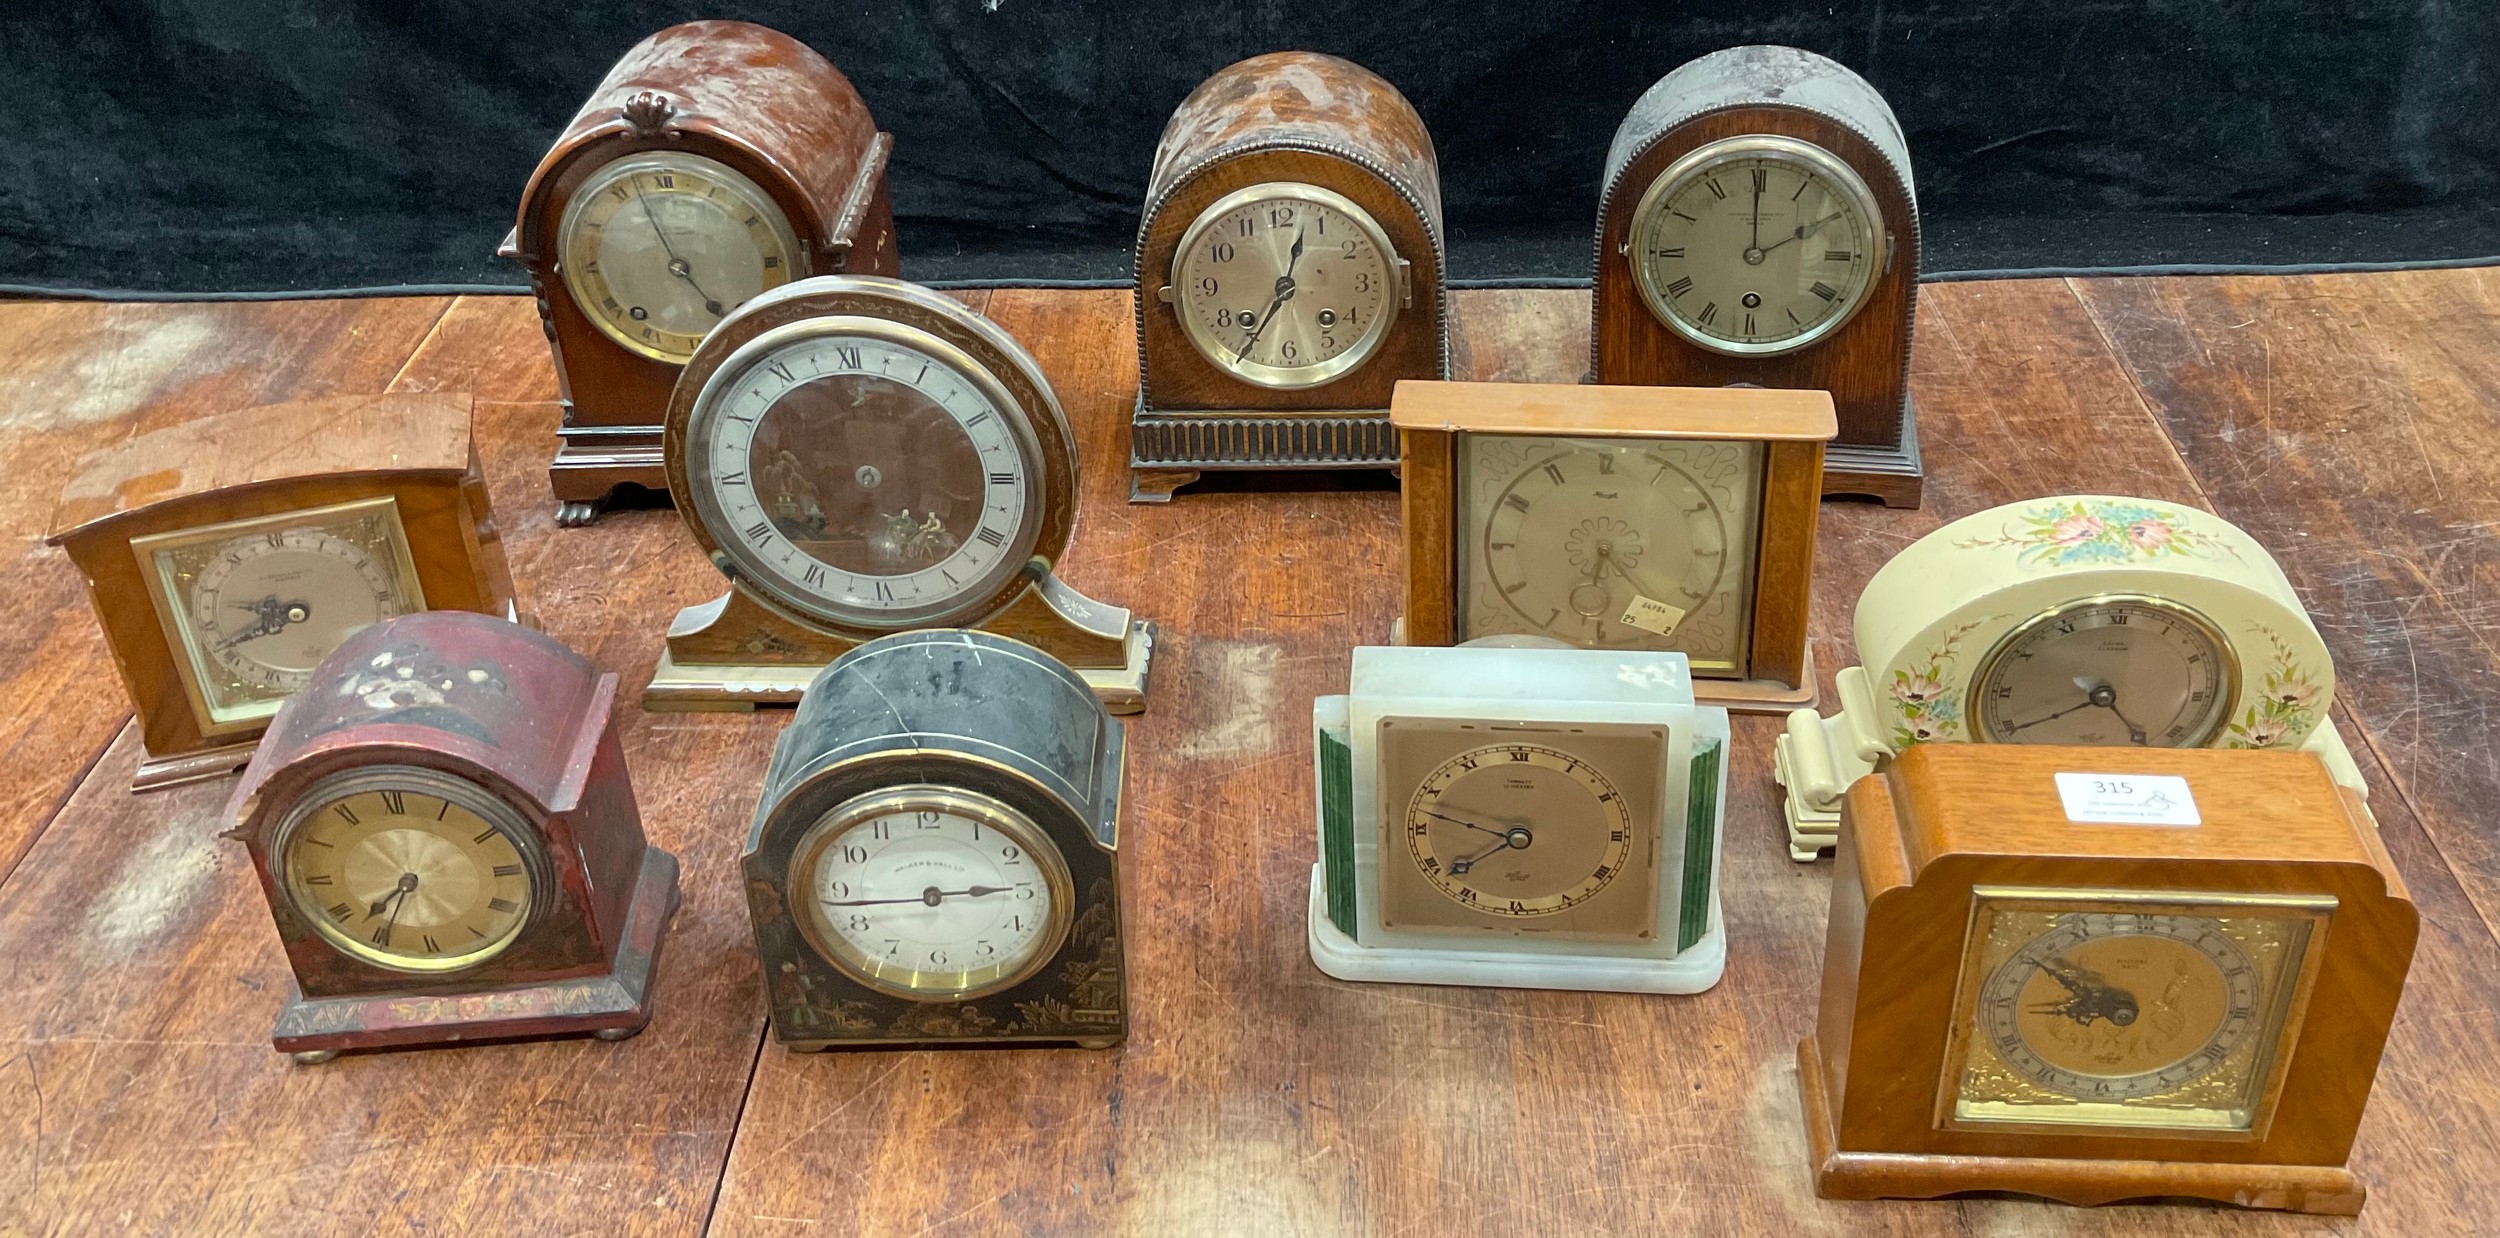 Clocks - early to mid 20th century mantel clocks, Elliot, chinoiserie, etc (11)